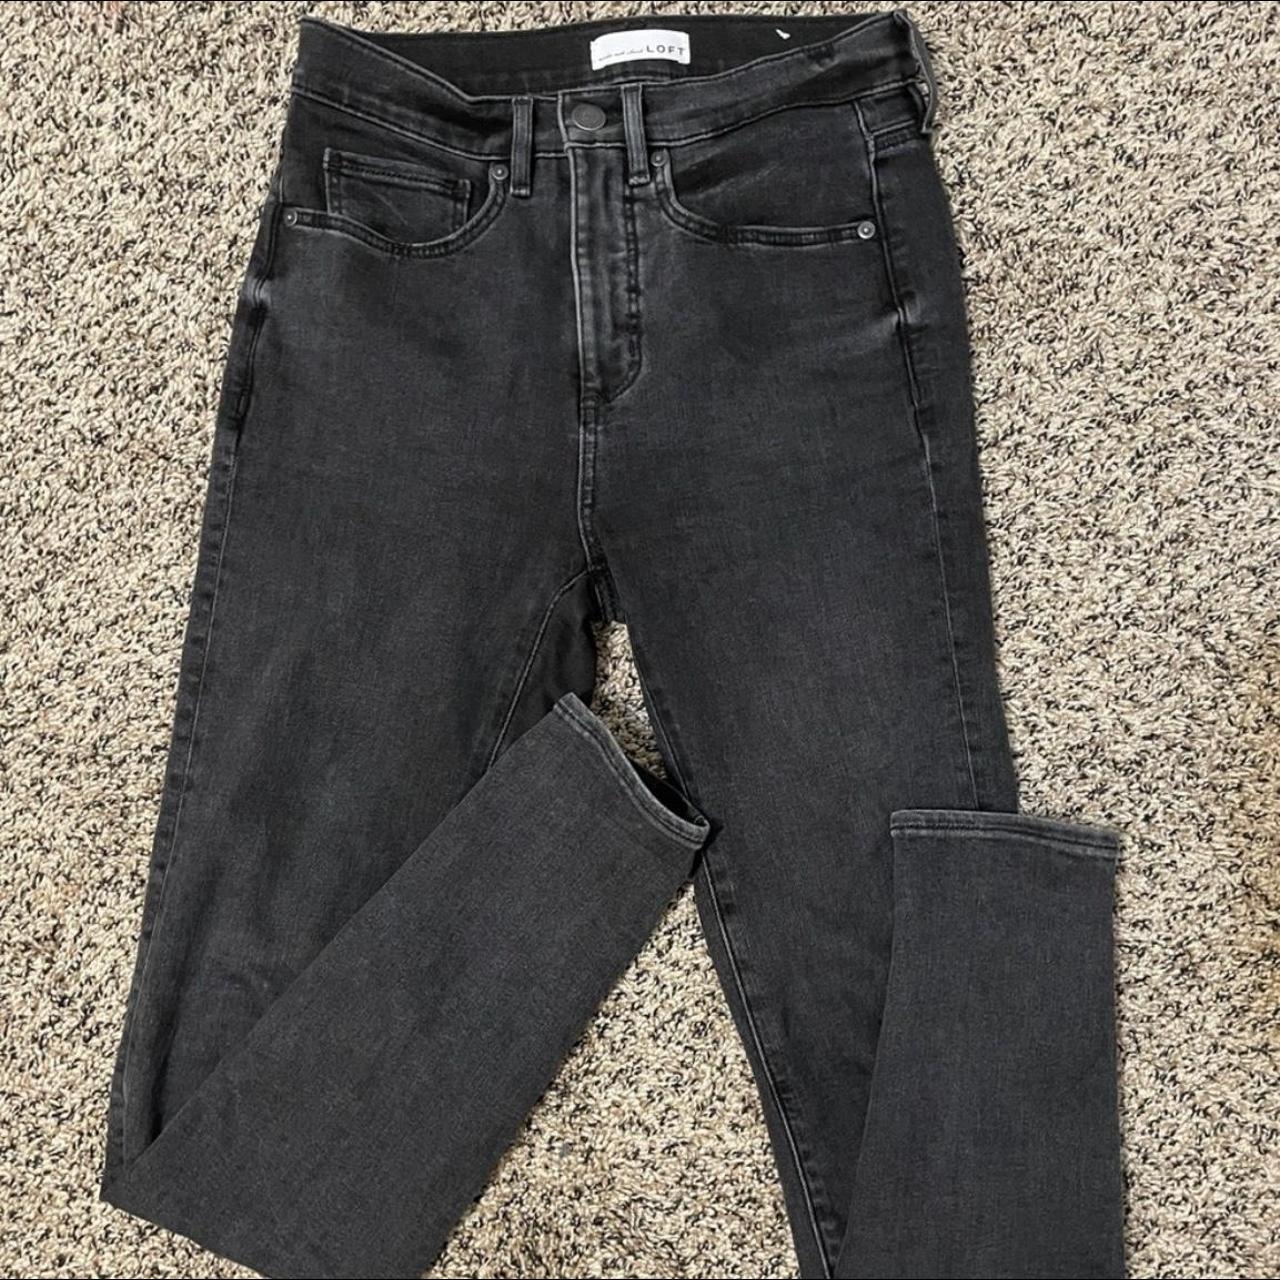 Loft Black Skinny Jeans Has a vintage wash to them - Depop